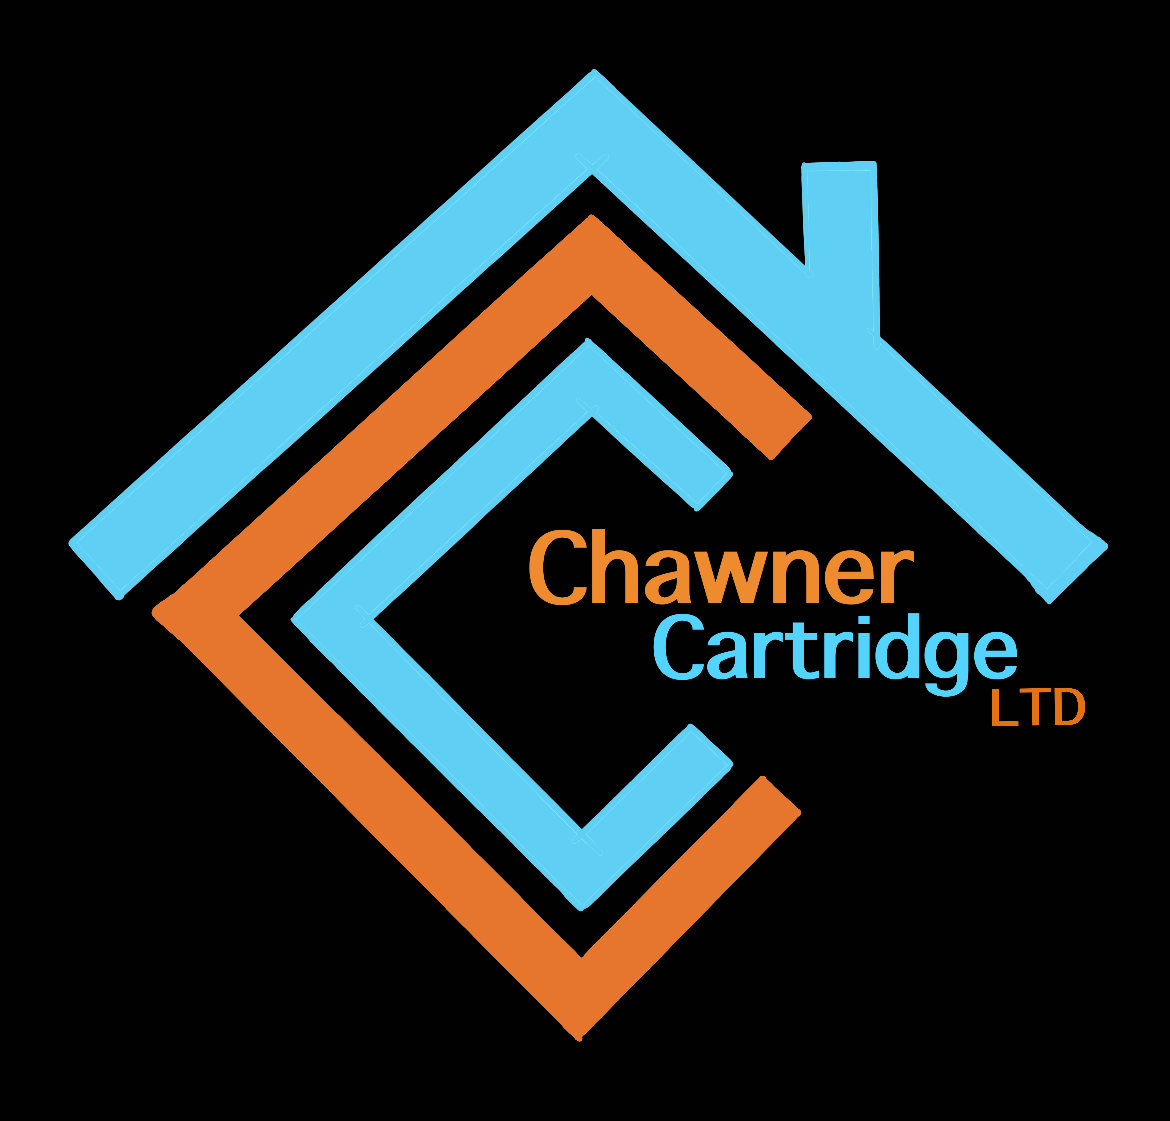 Chawner Cartridge LTD